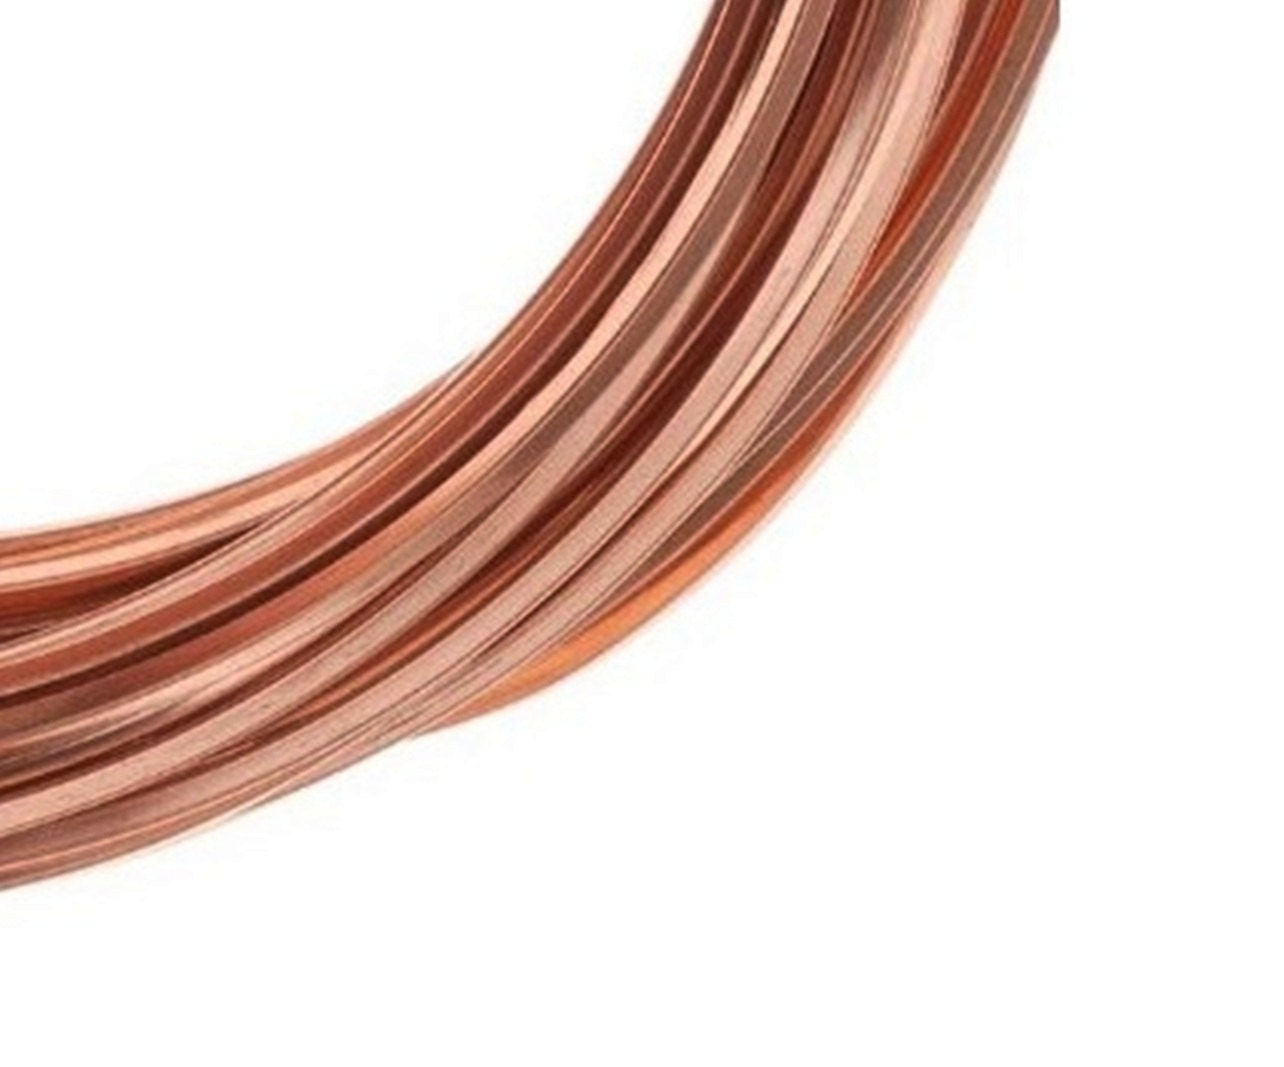 Copper Wire 18 Gauge Spool of Dead Soft Premium Jewelers Grade Pure Copper  Wire 13 Foot Length Soft Copper Wire 